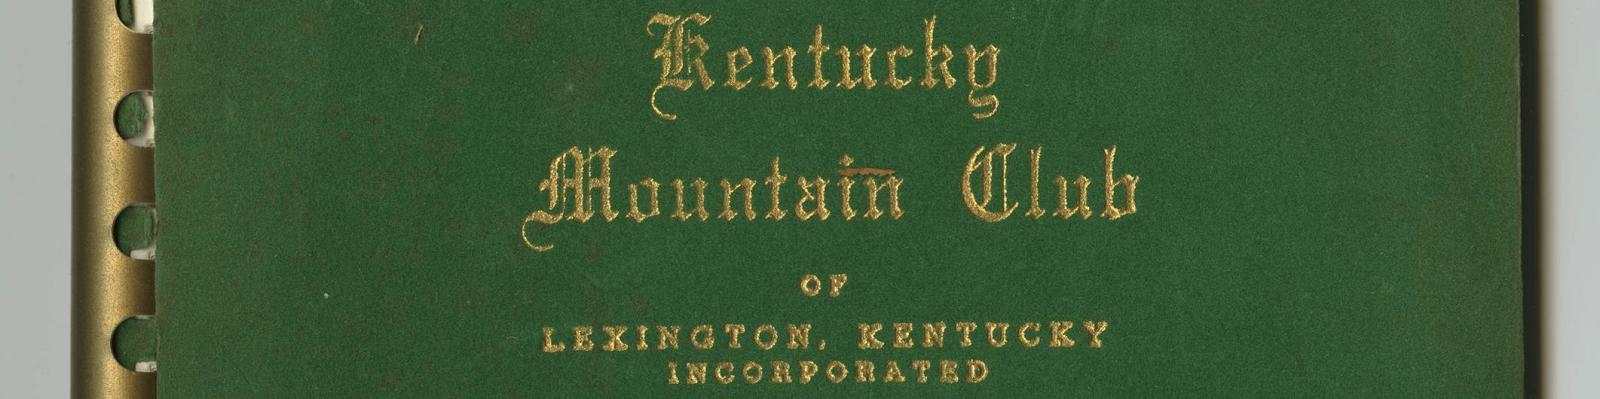 kentucky mountain club directory